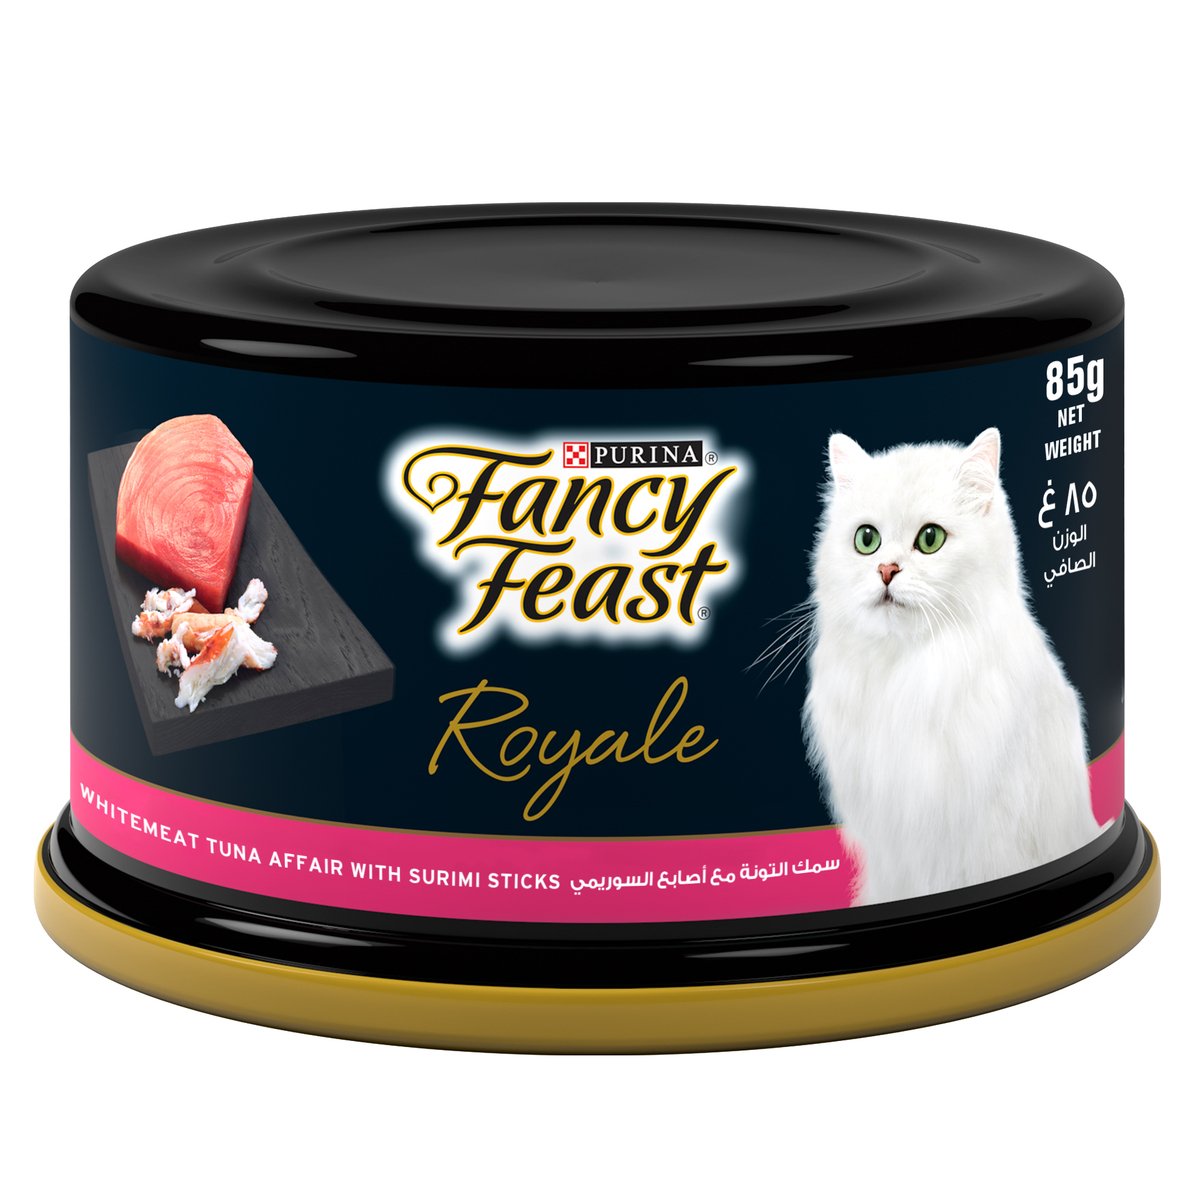 Fancy Feast Royale White Meat Tuna Affair With Surimi Sticks 85 g